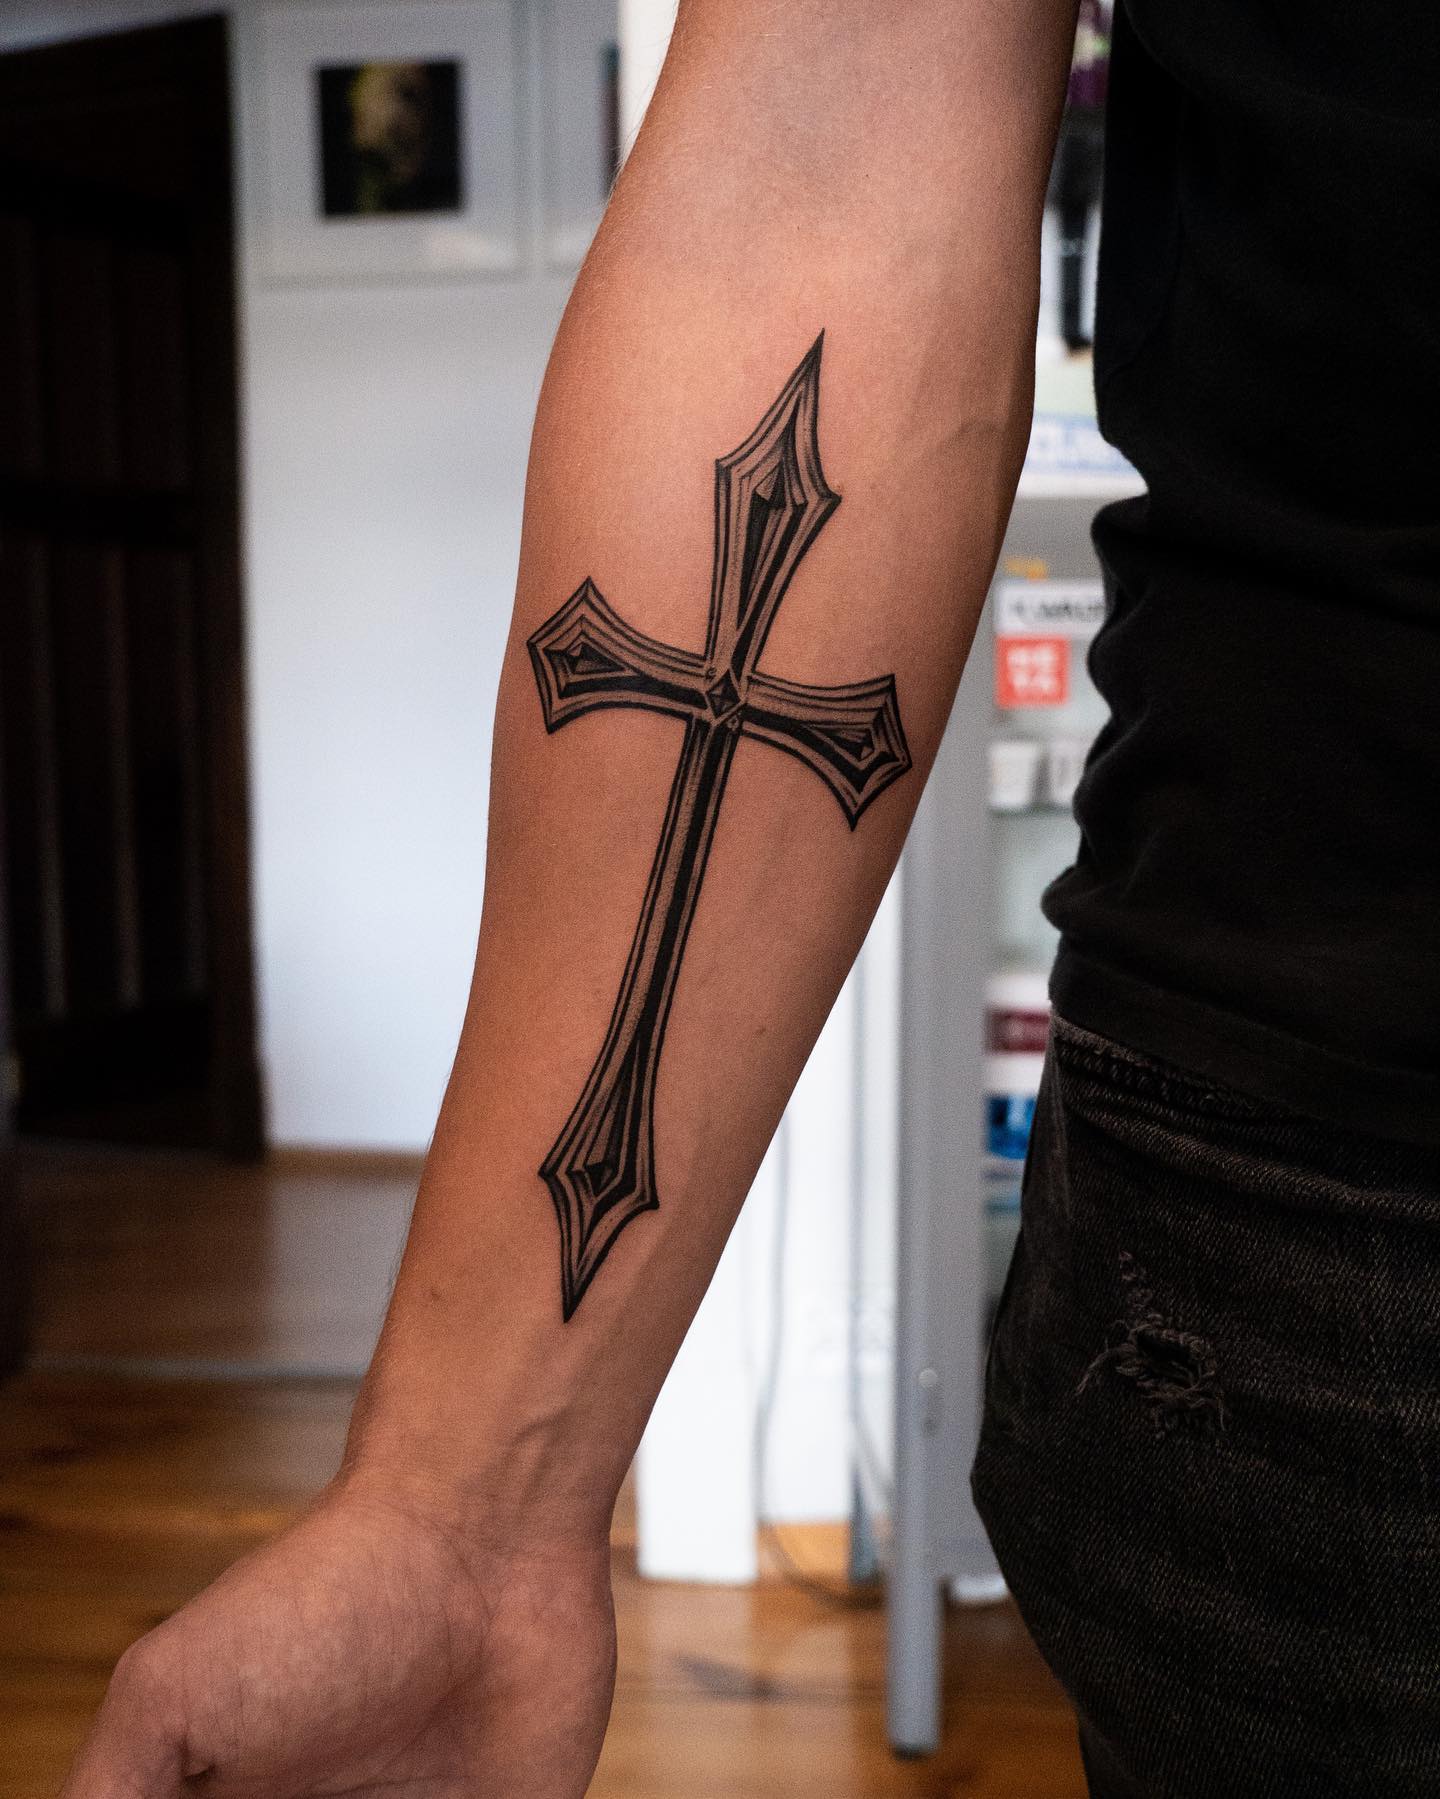 Upper arm cross tattoo by Sabreclah on DeviantArt